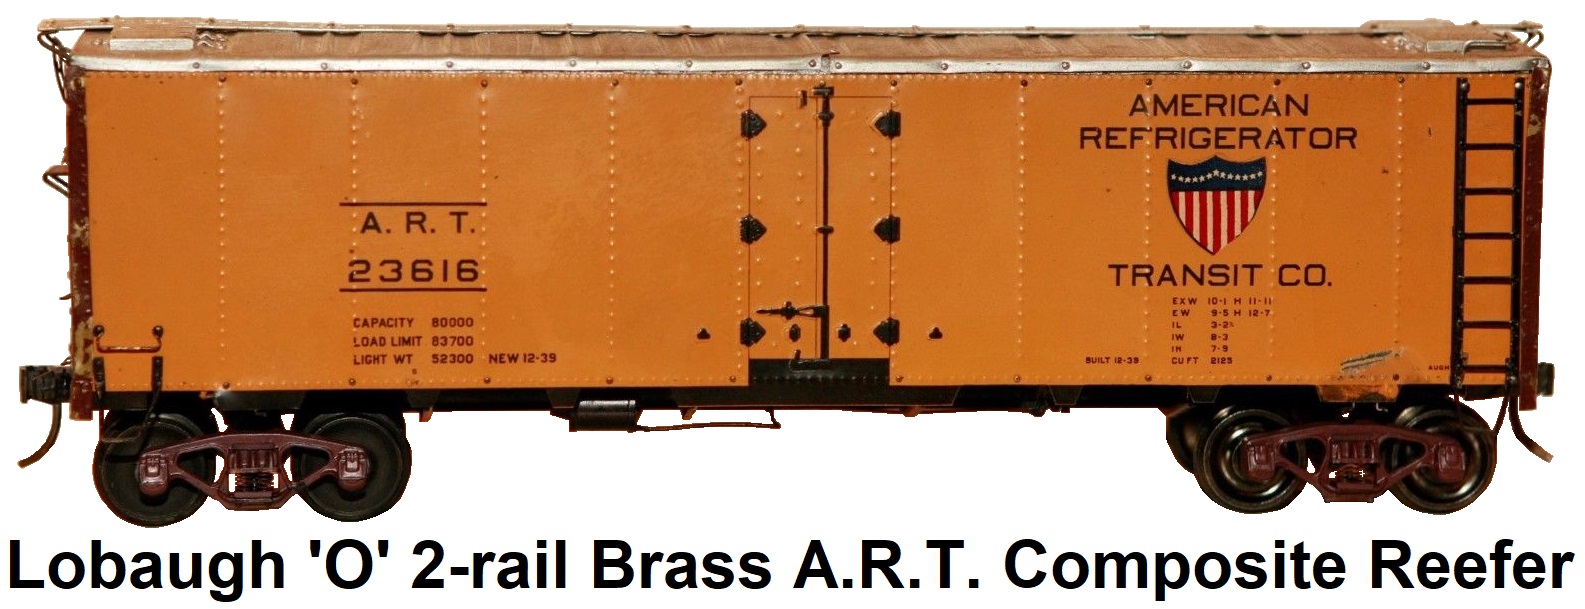 Lobaugh 'O' Scale 2-rail Kit-built brass A.R.T. American Refrigerator Transit Co. Reefer #23618